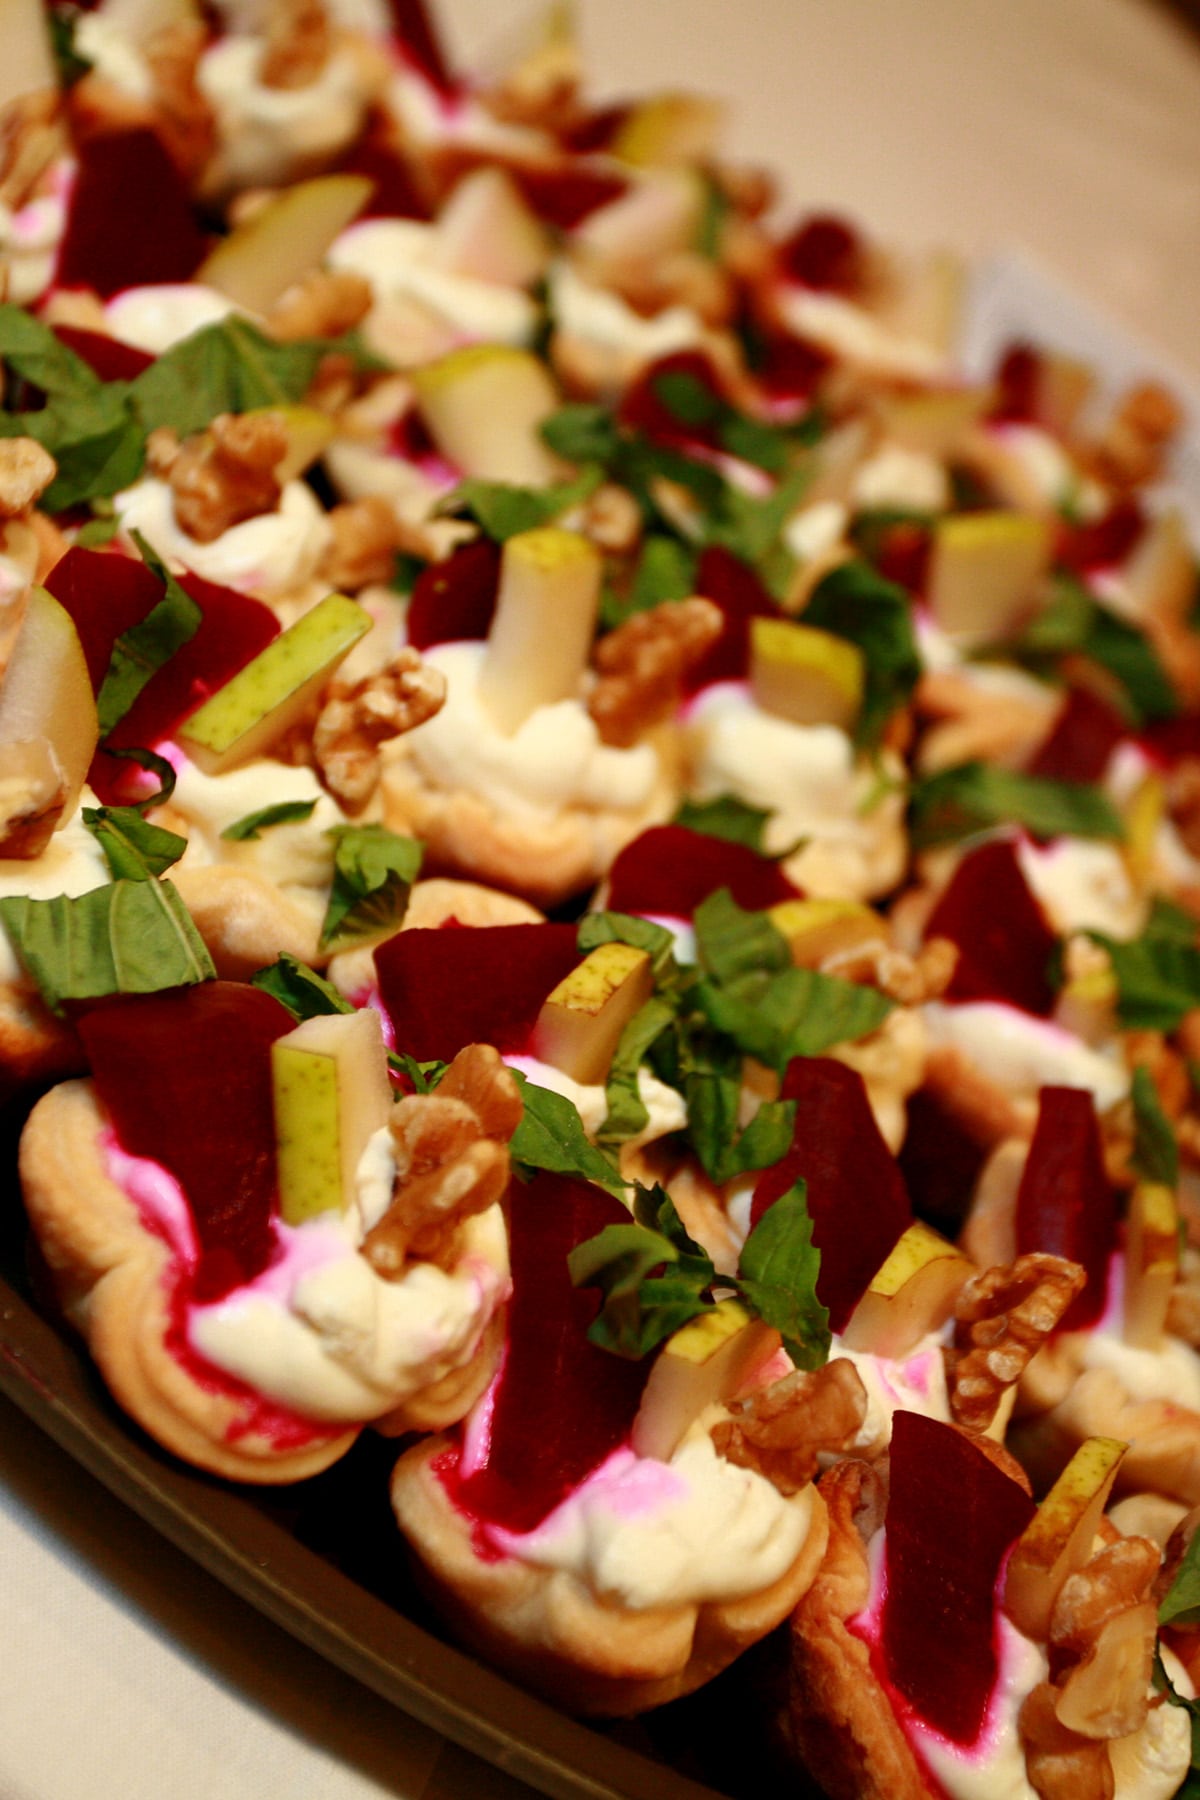 A close up view of mini beet salad tarts on a platter.